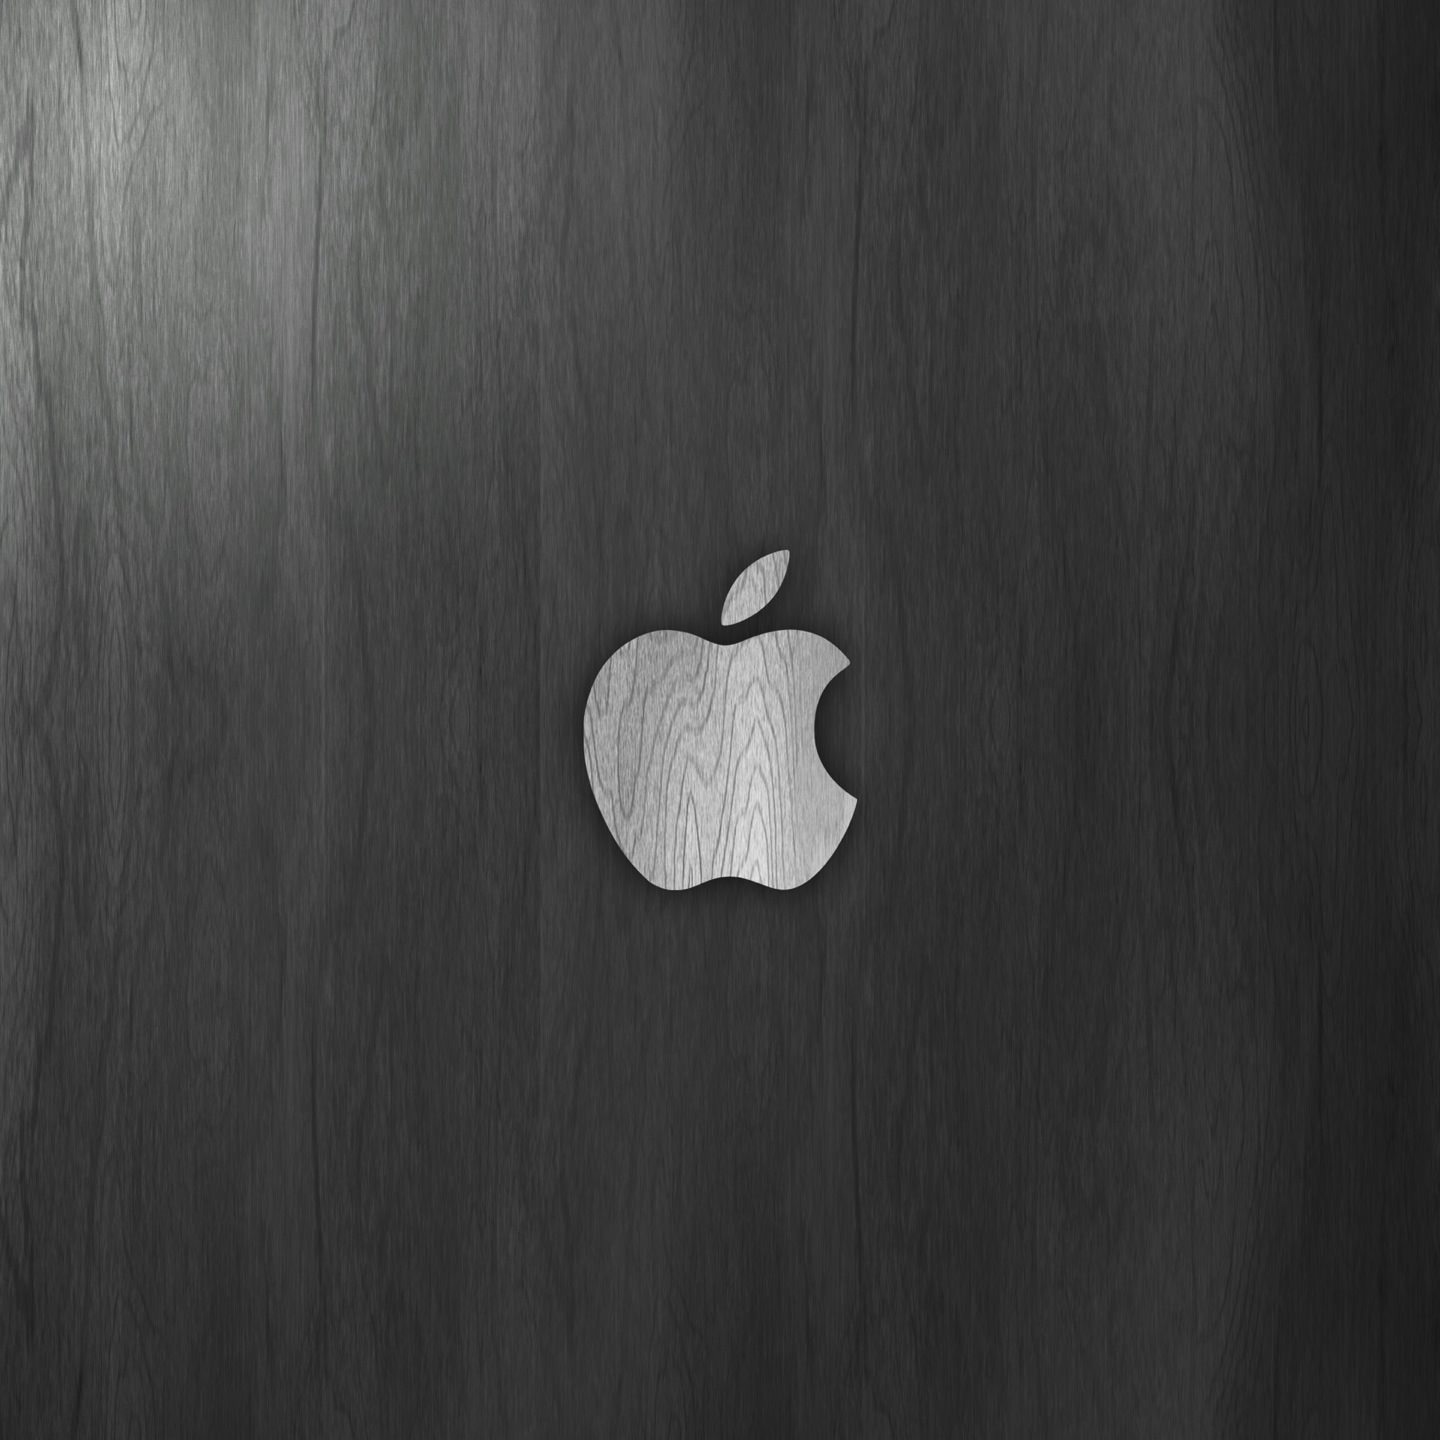 Apple wood grain black | wallpaper.sc SmartPhone